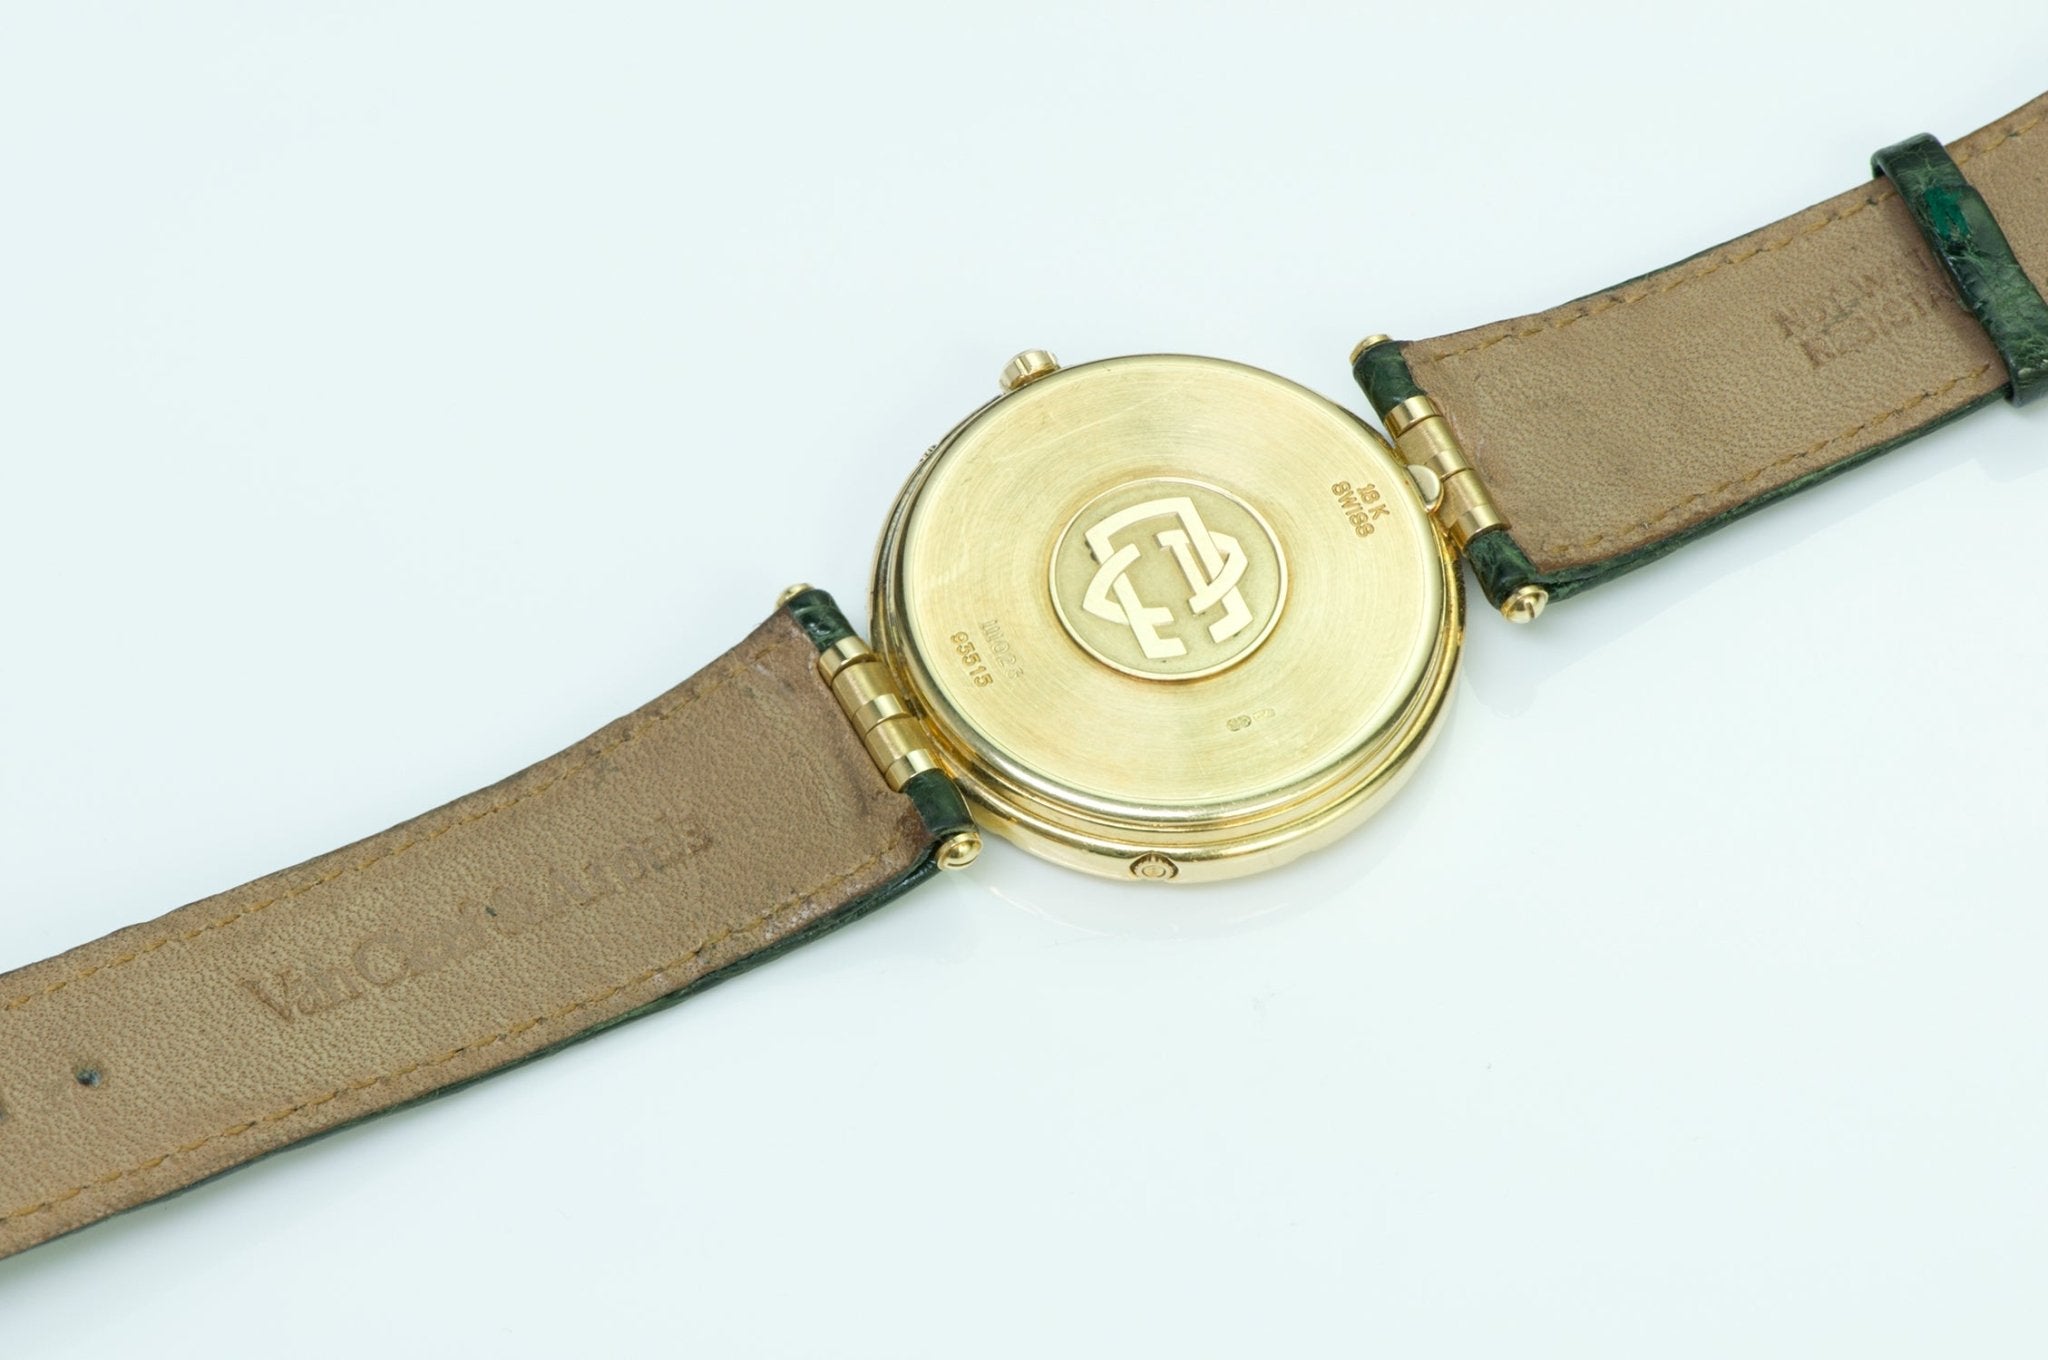 Van Cleef & Arpels La Collection Moon Phase 18K Gold Watch